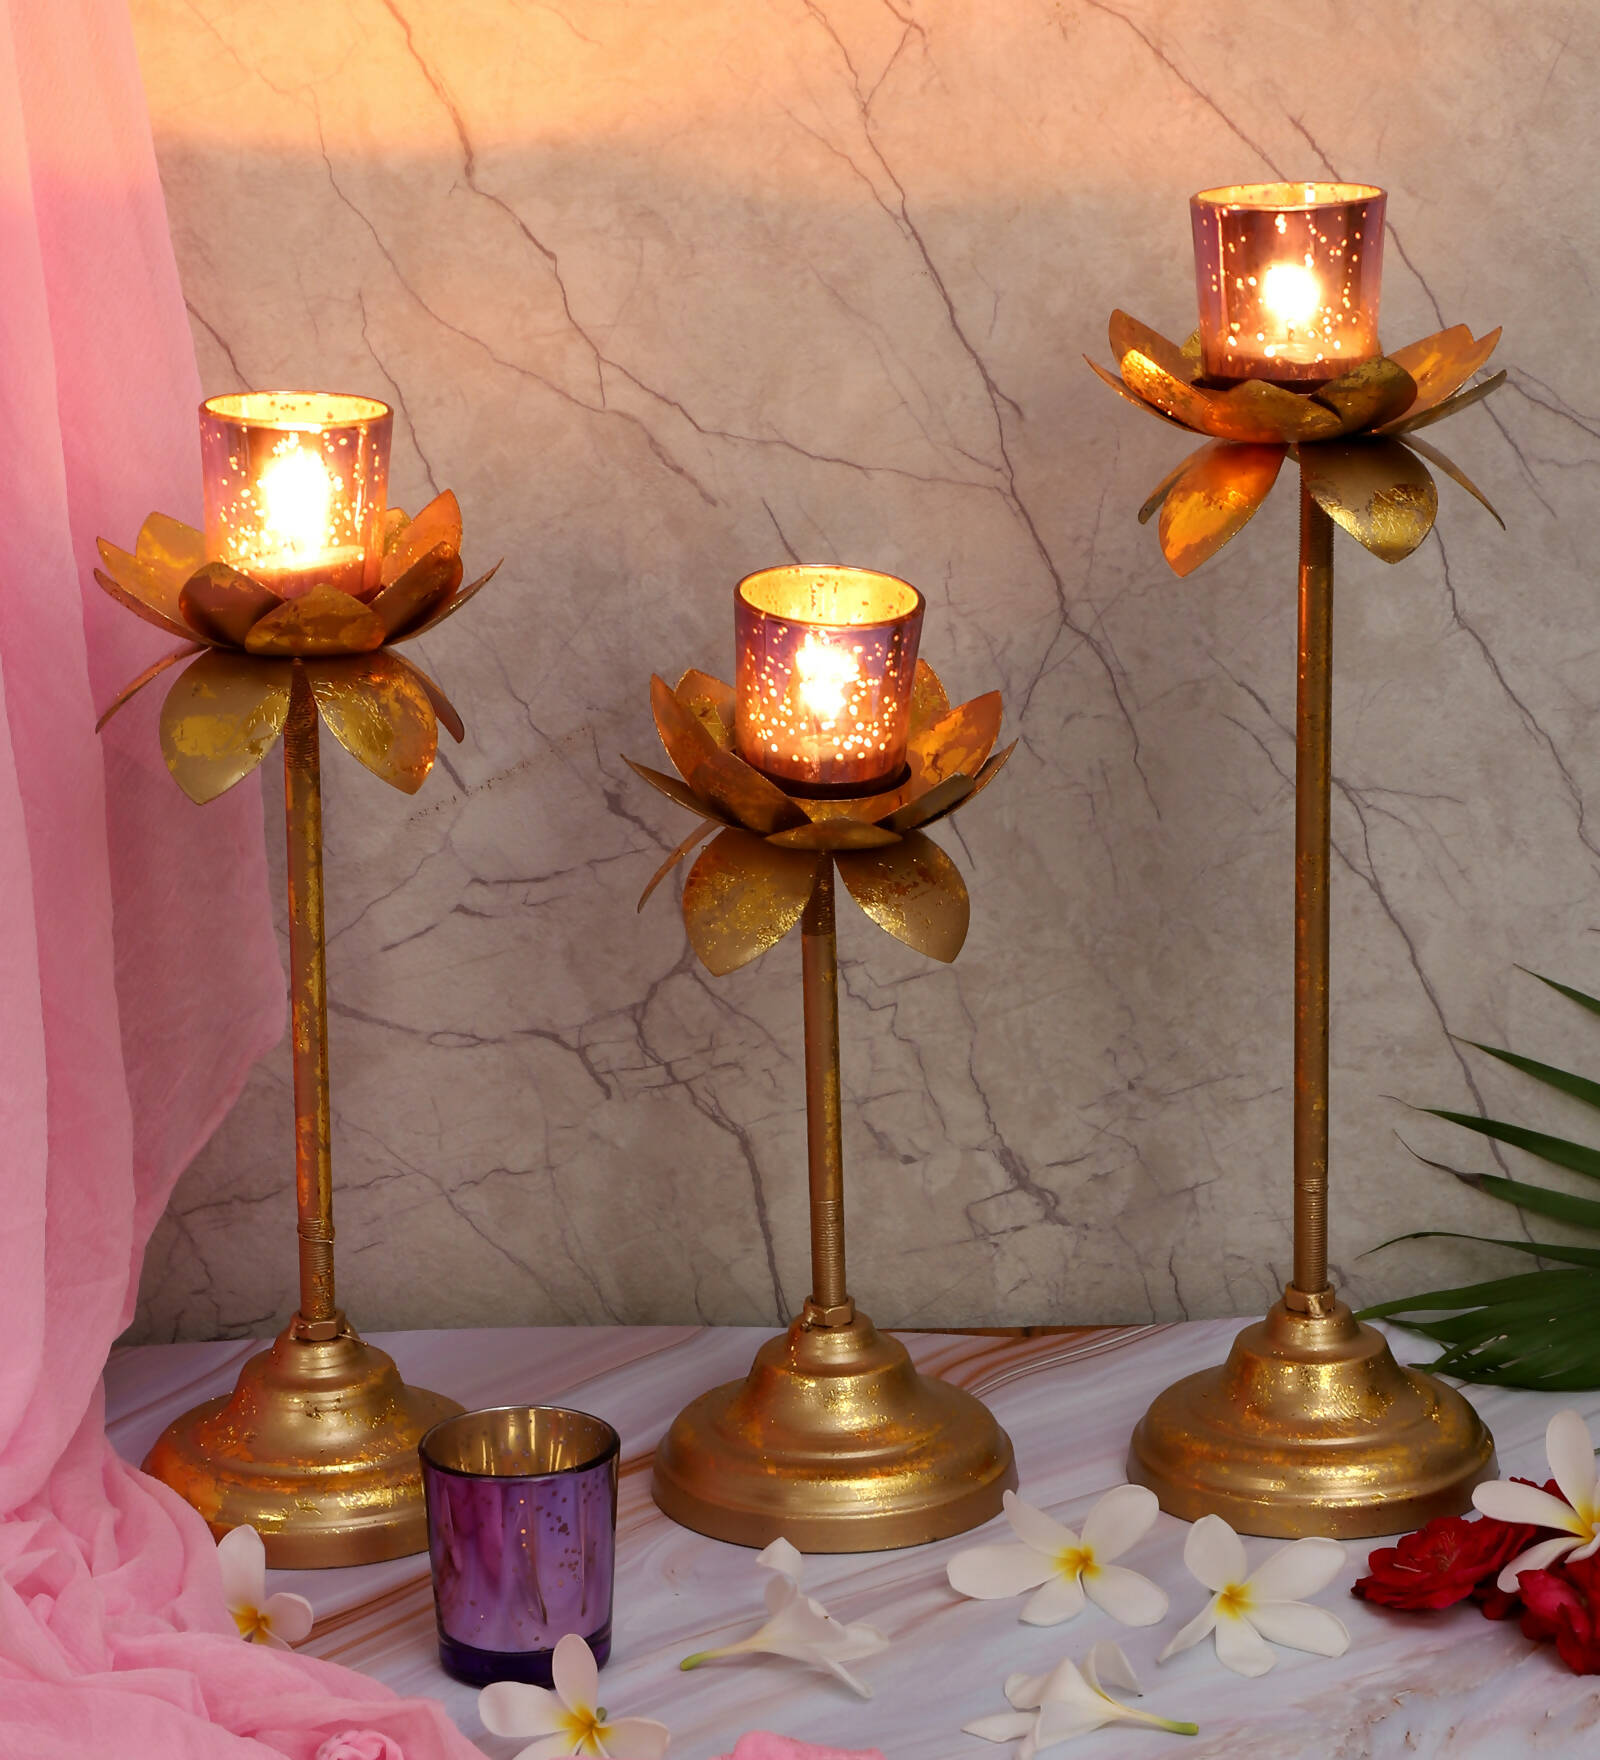 Three Layer Lotus With 4 Puprle Glass Votive Tealight Holder